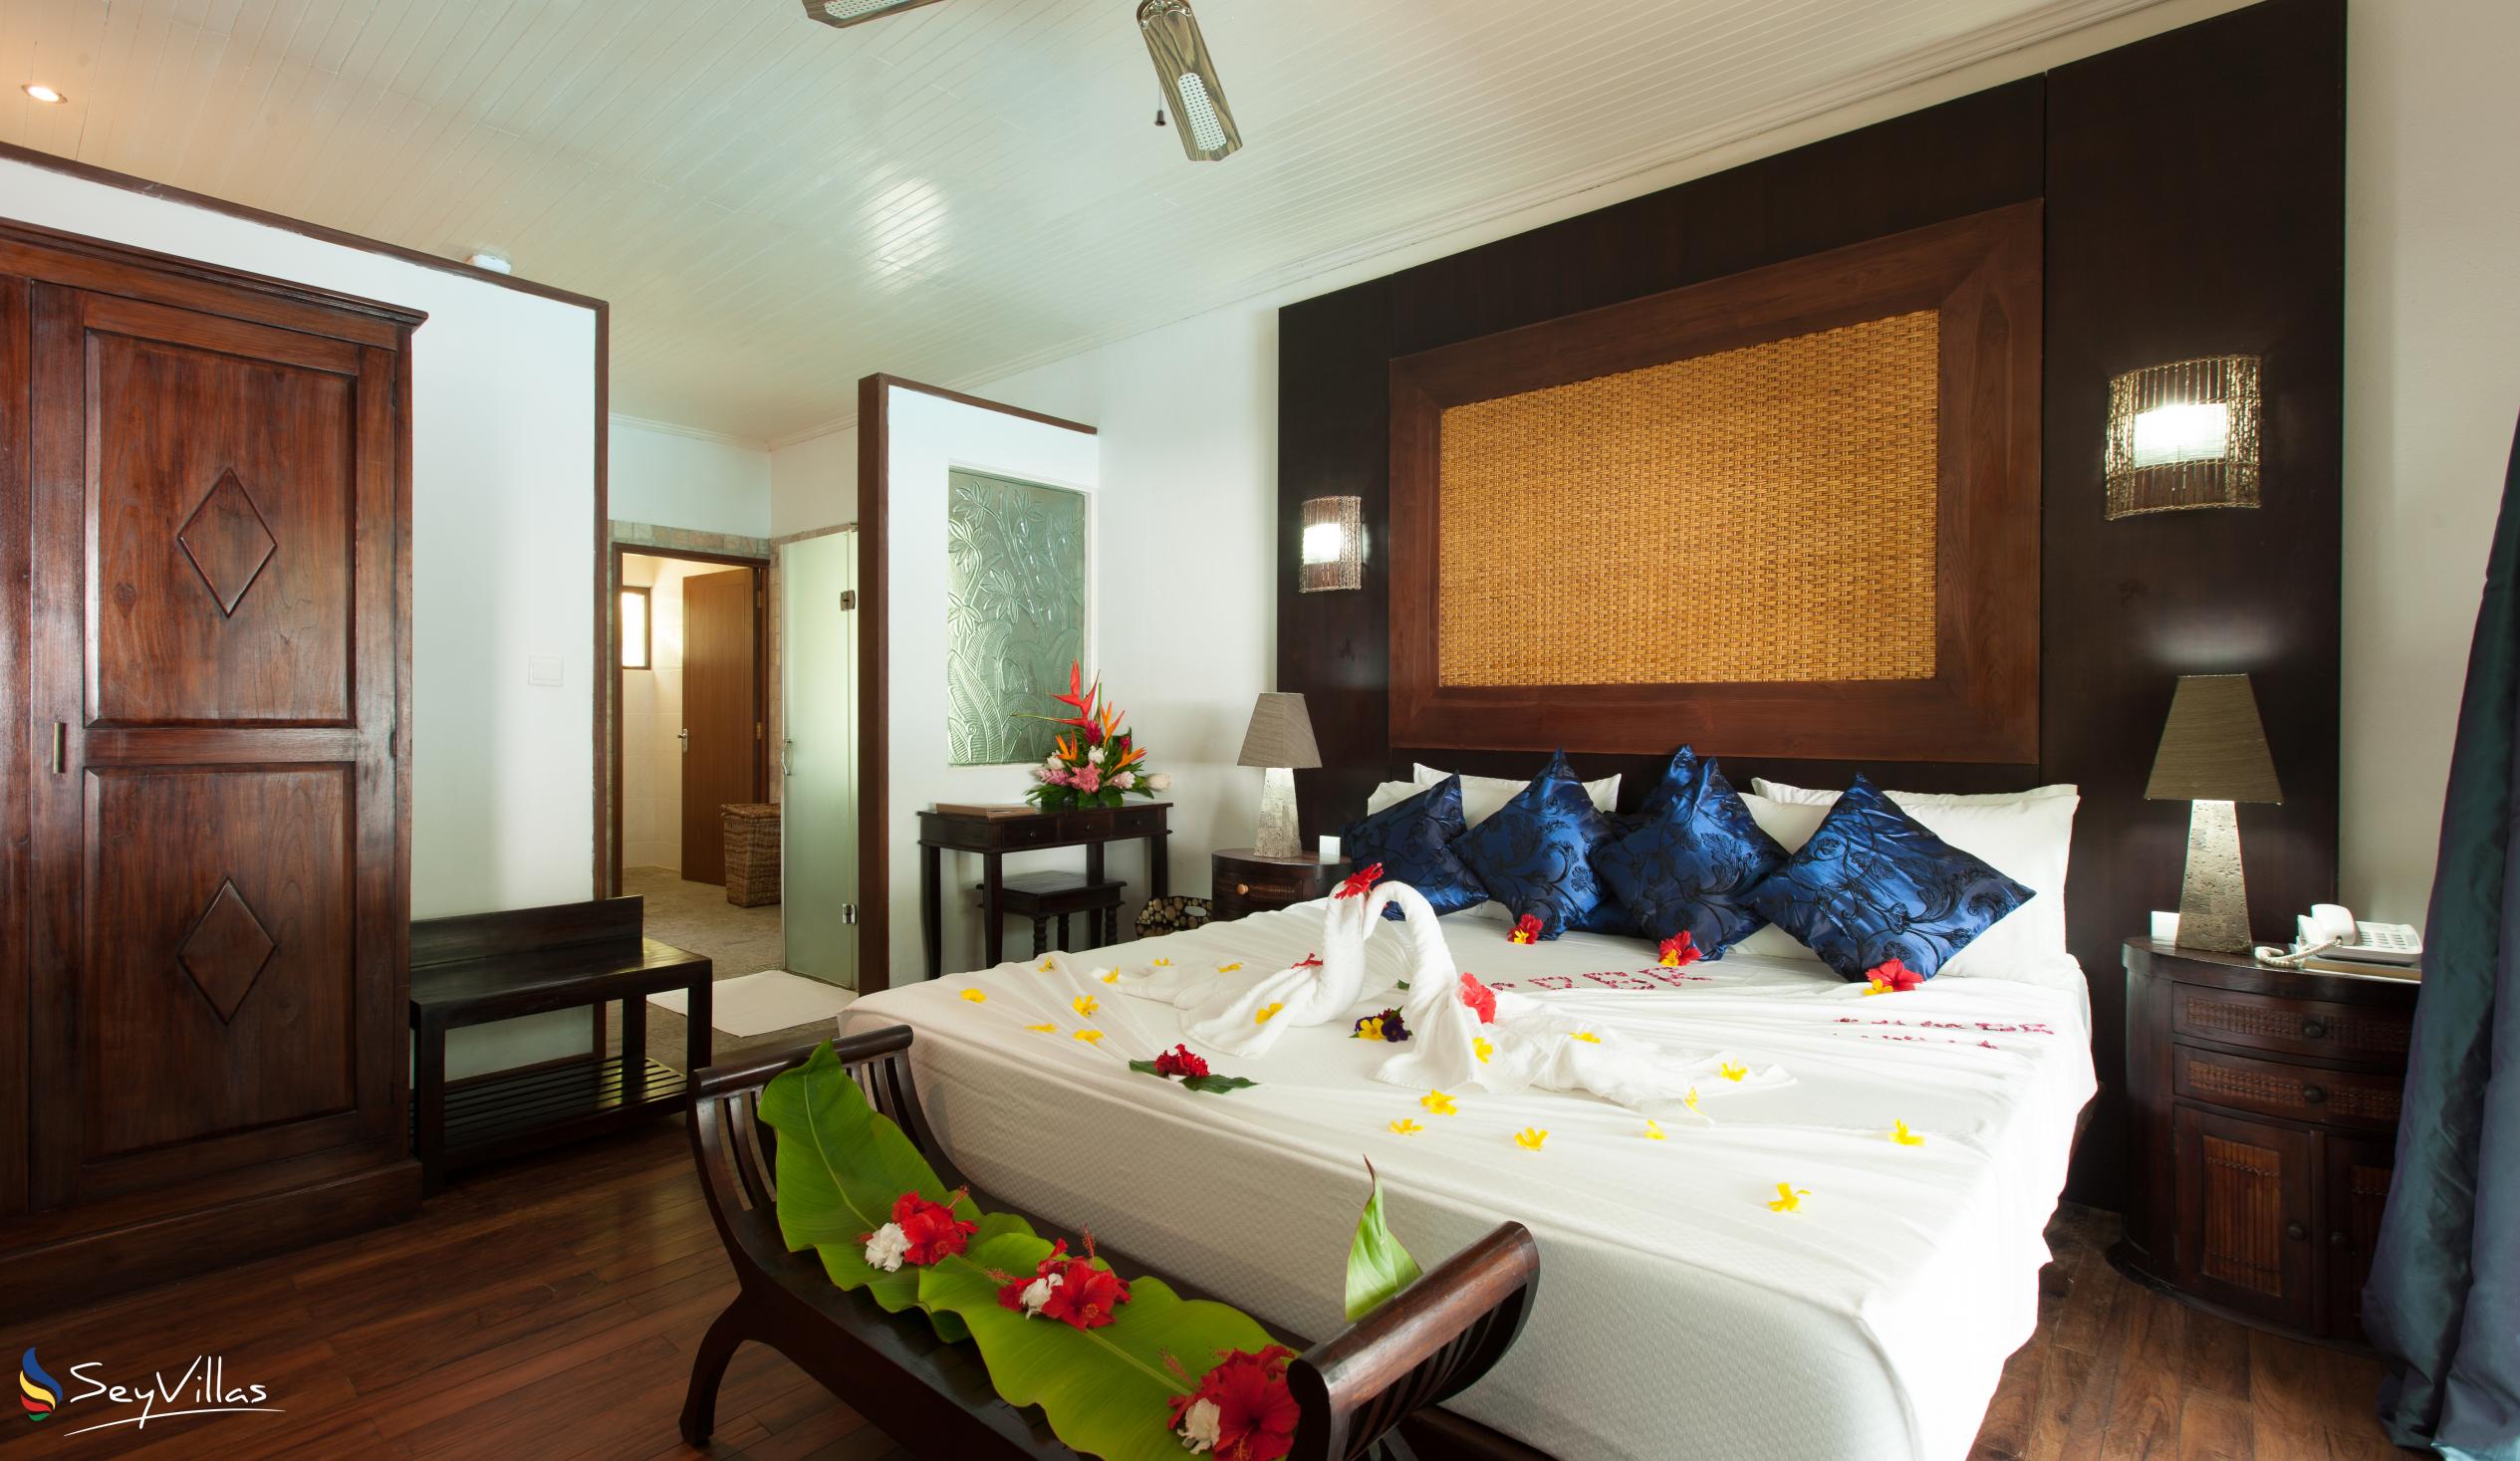 Photo 55: Le Relax Beach Resort - Deluxe Suite - Praslin (Seychelles)